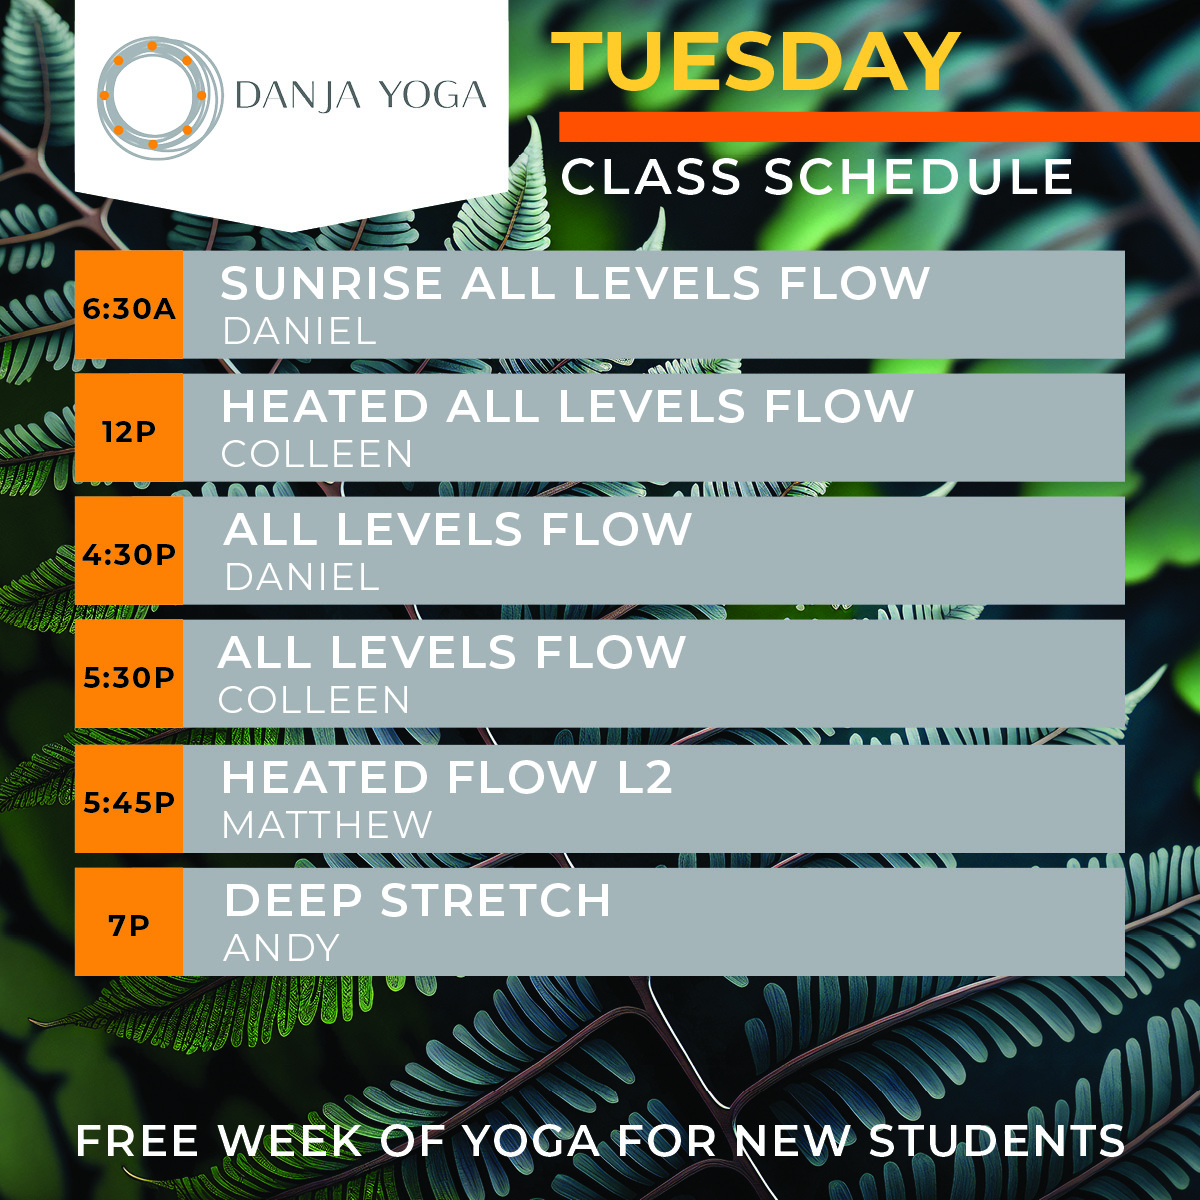 YOU can DESTRESS with YOGA! And increase cardiovascular health, focus, and stamina. Sign up at DanjaYoga.com or on the Danja Yoga App. We'll see you soon!
.
#yogacbus #cbusyoga #614yoga #yoga614 #asseenincbus #asseenincolumbus #onlyincbus